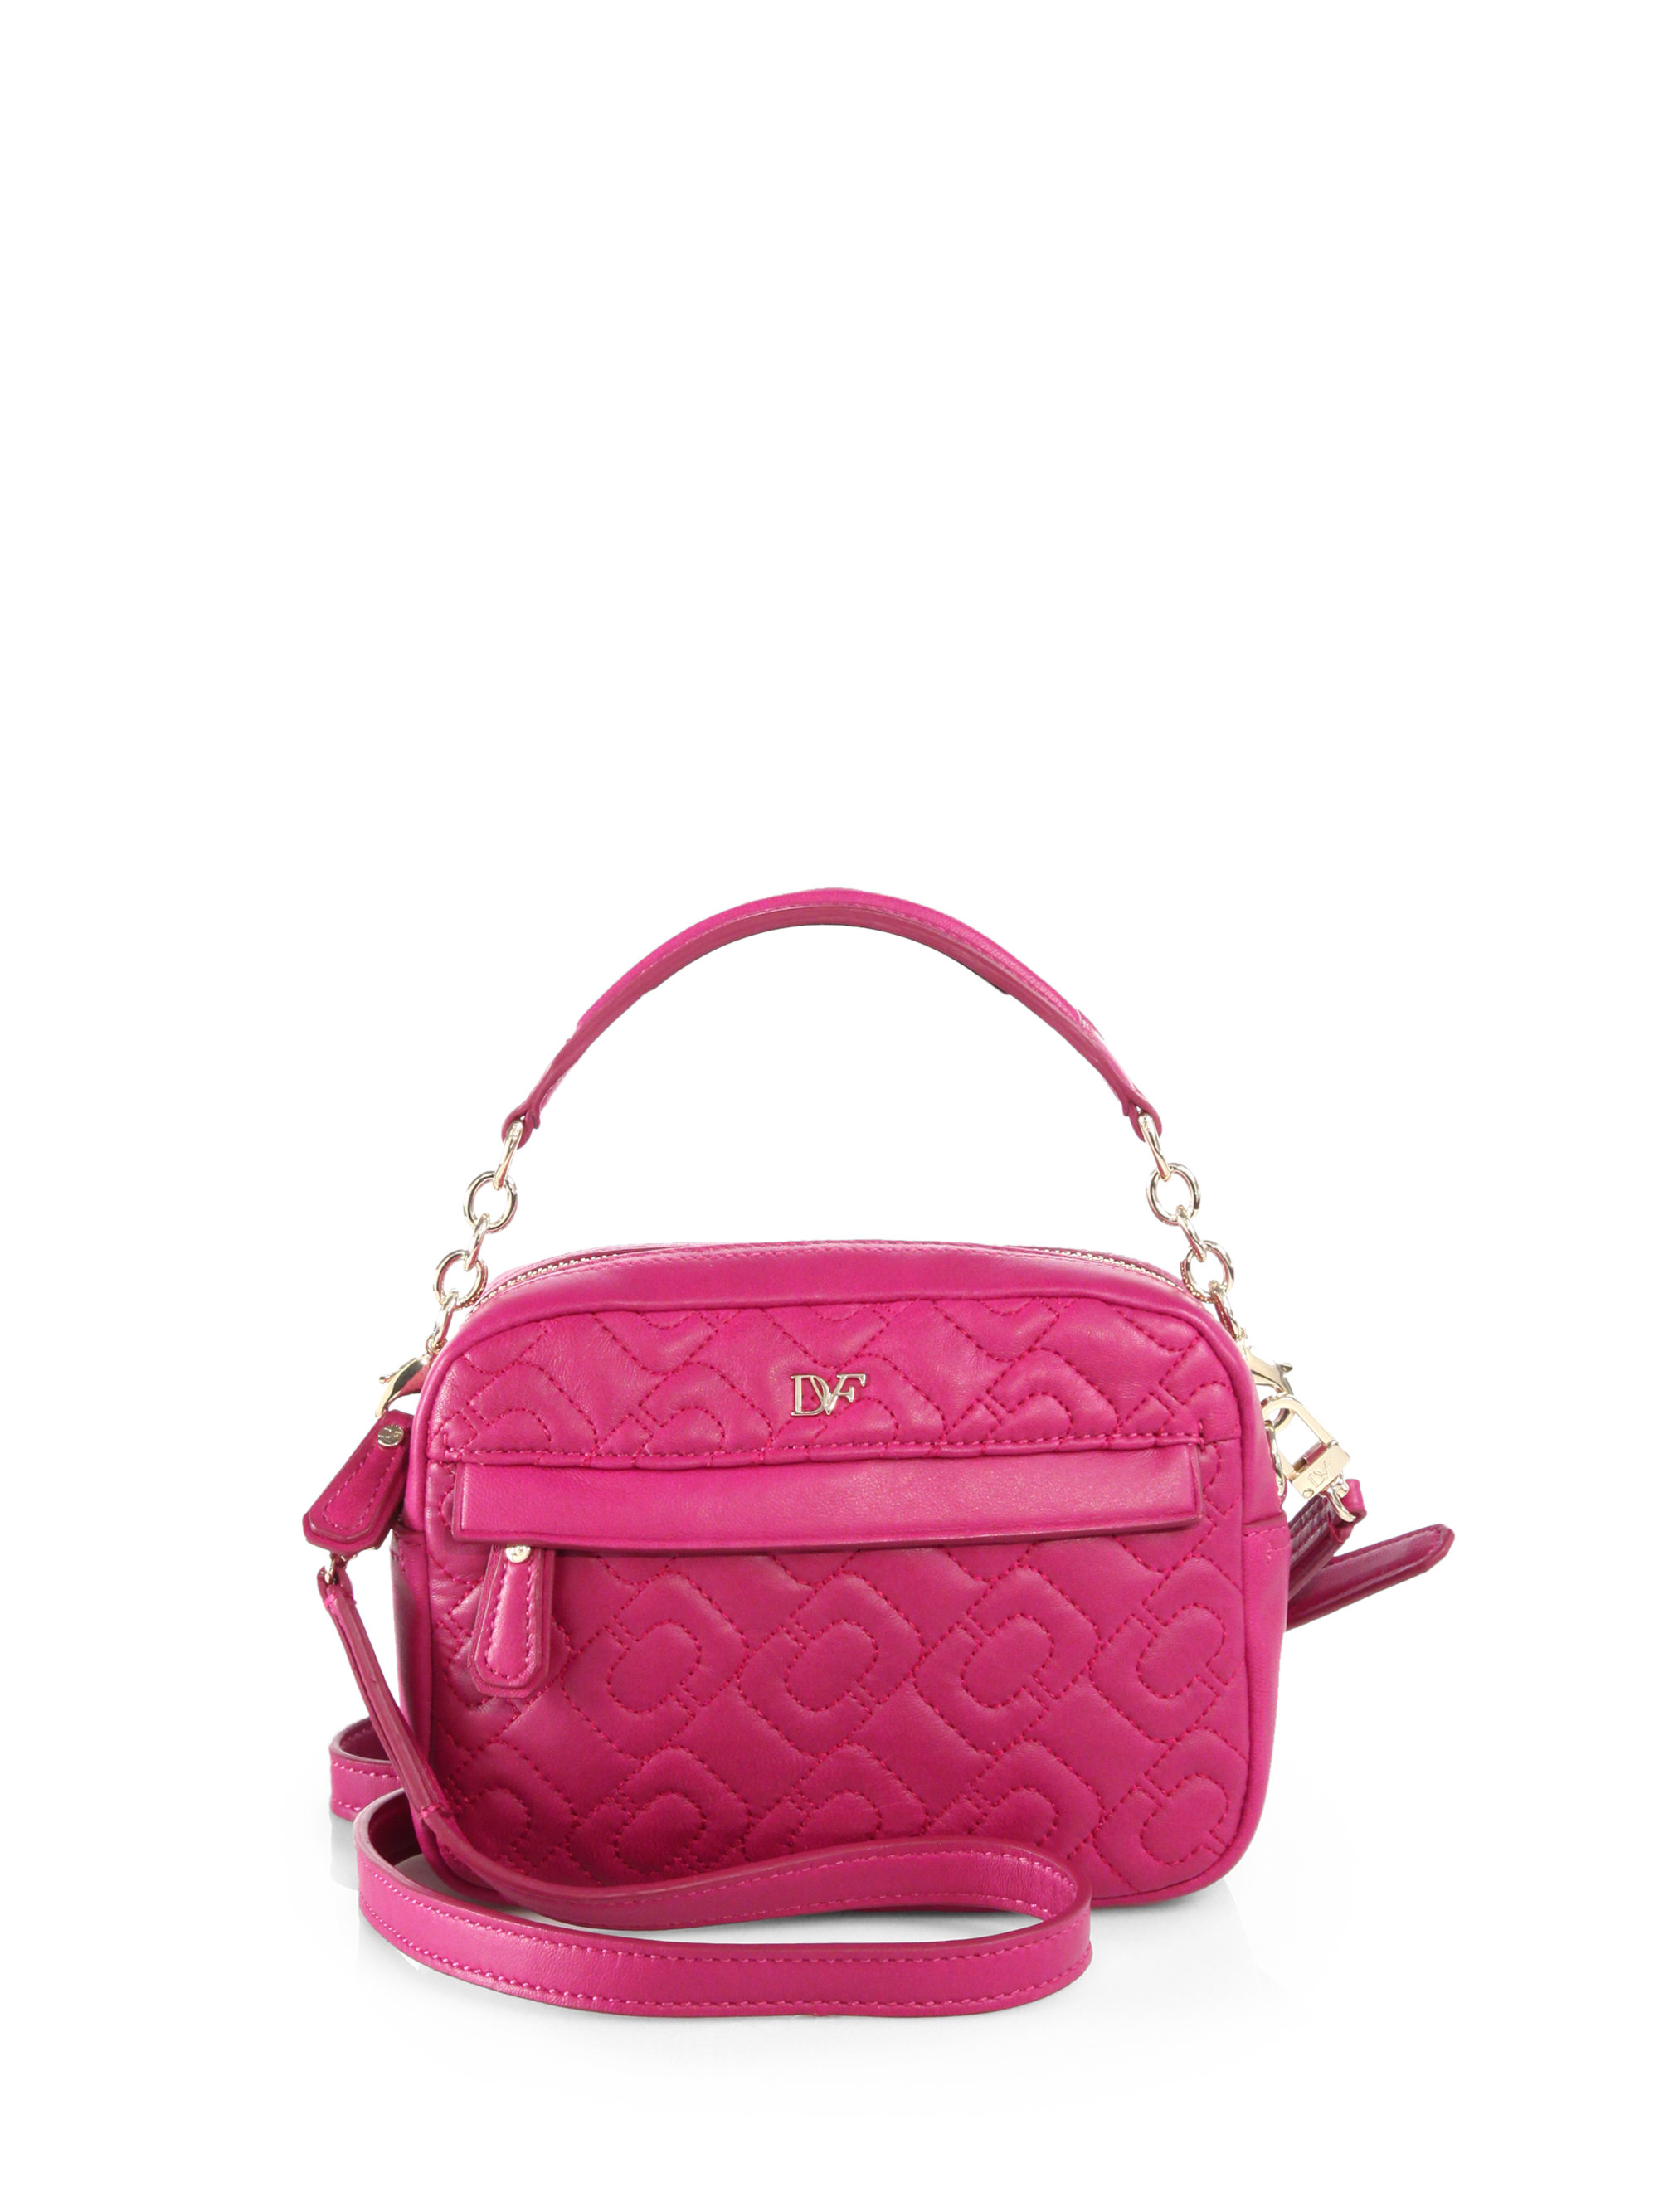 Diane Von Furstenberg Milo Mini Quilted Leather Crossbody Bag in Pink ...